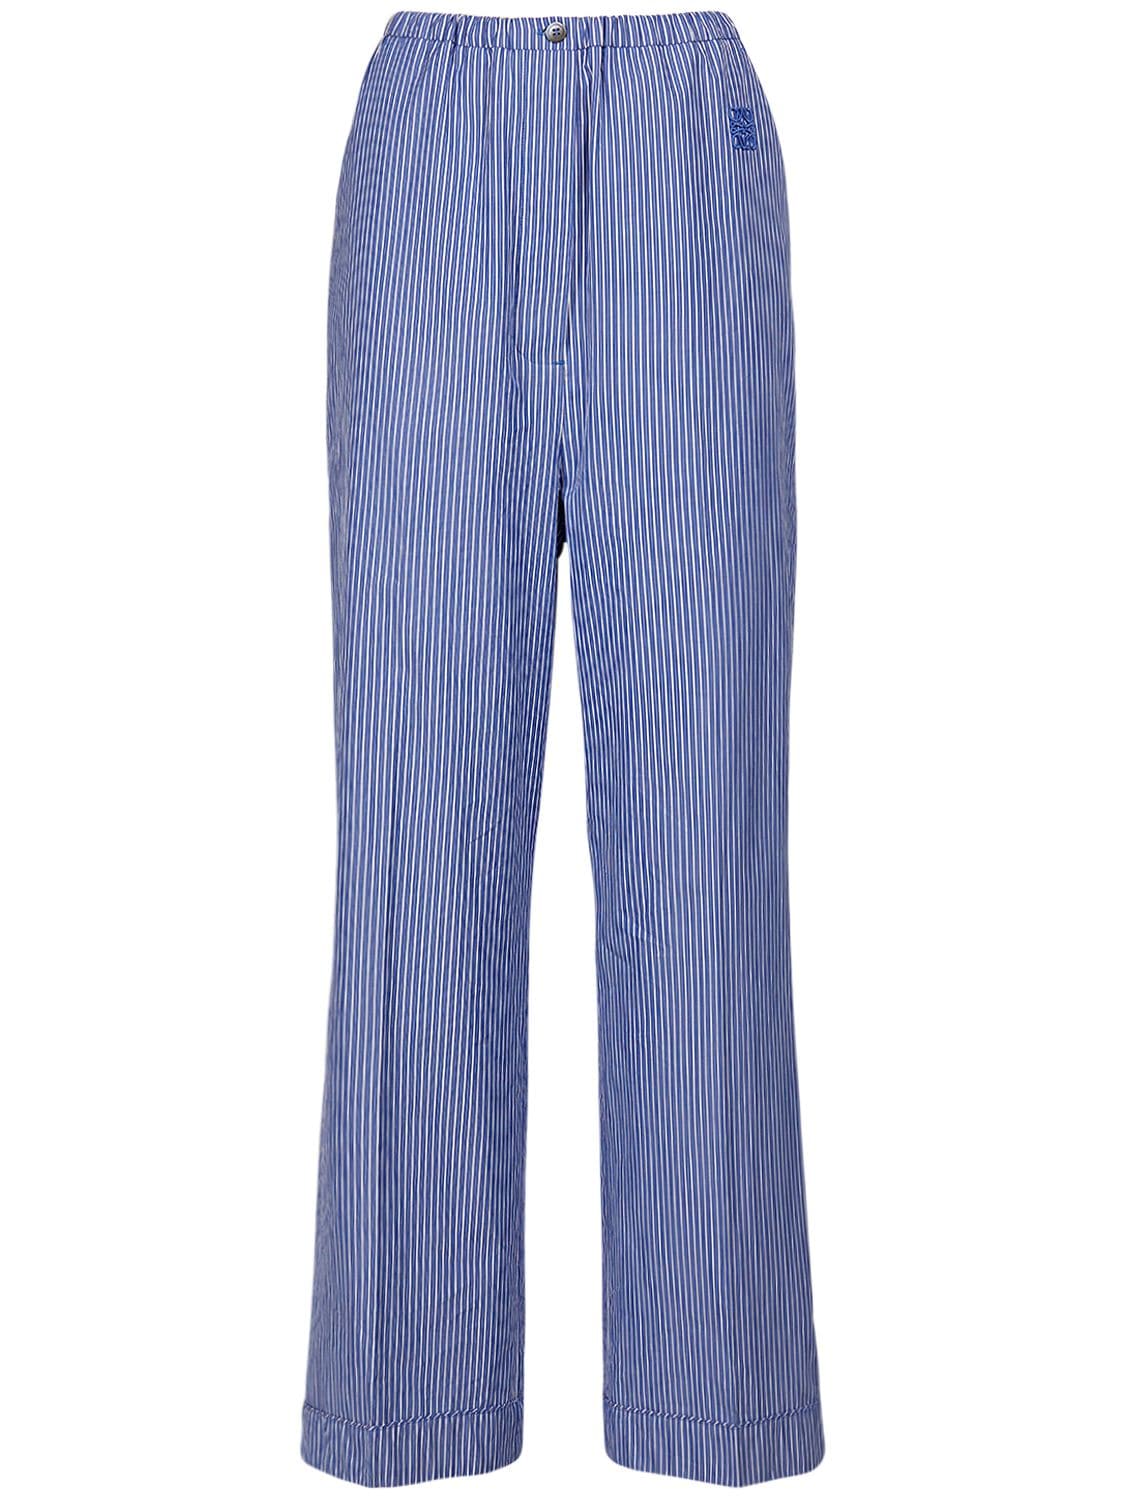 Loewe Striped Pyjama Trousers 'blue/white